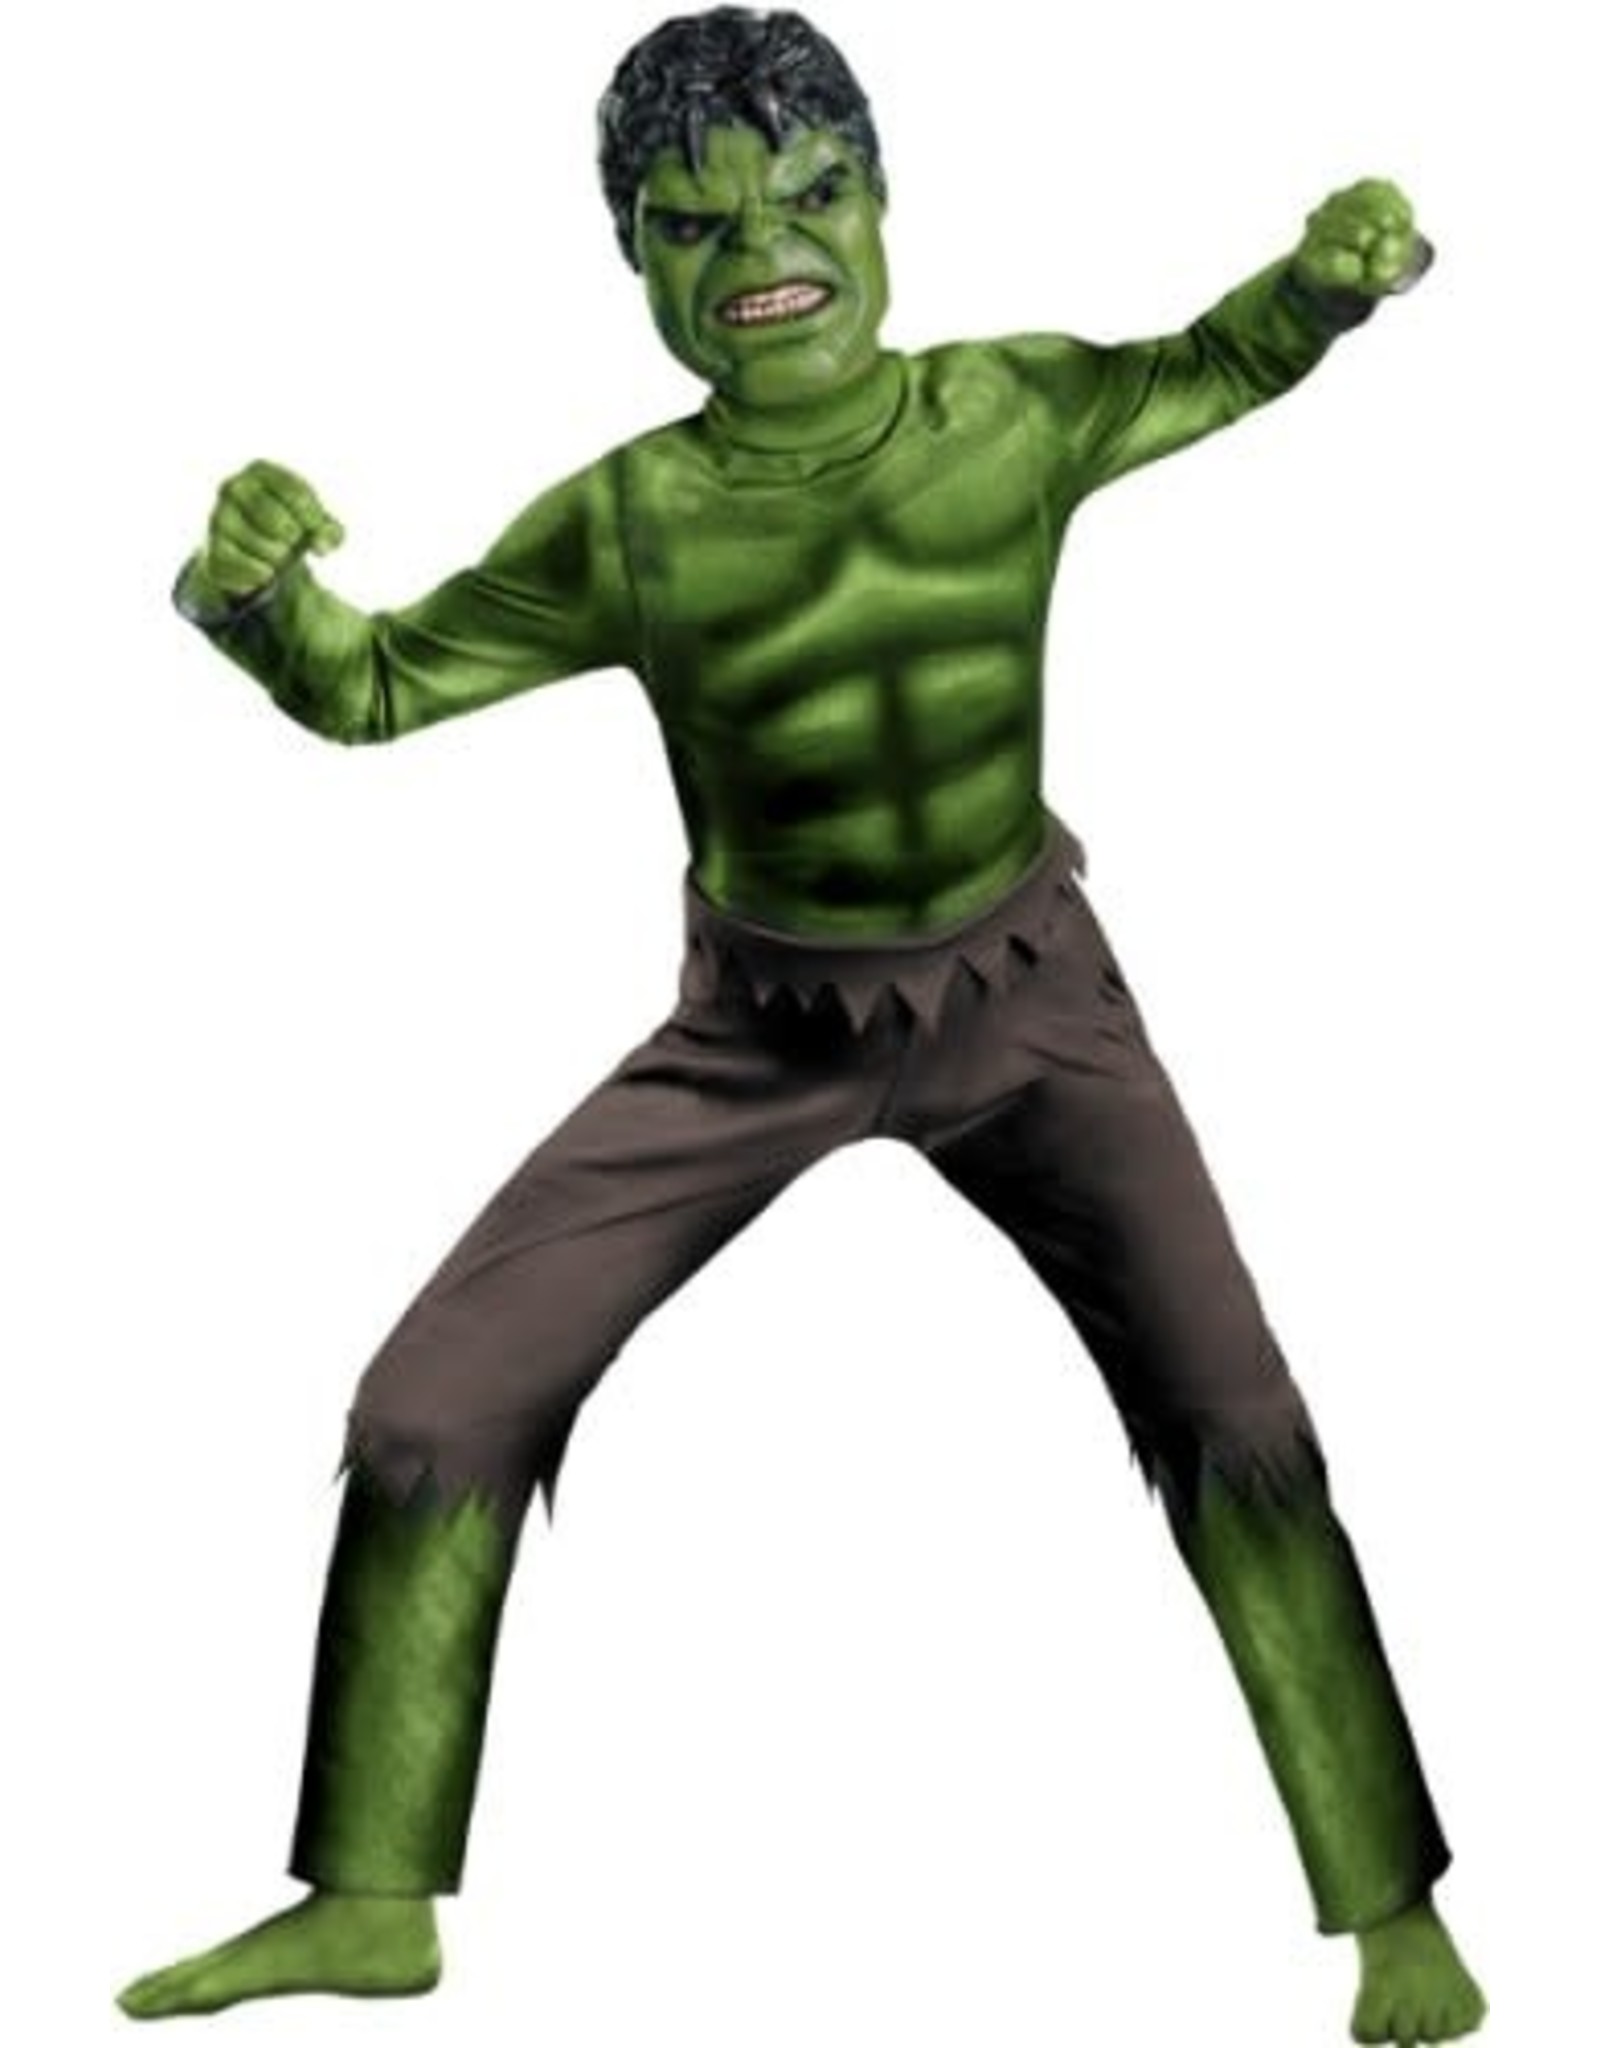 Disguise Inc Hulk, Green, L - Large, 75092